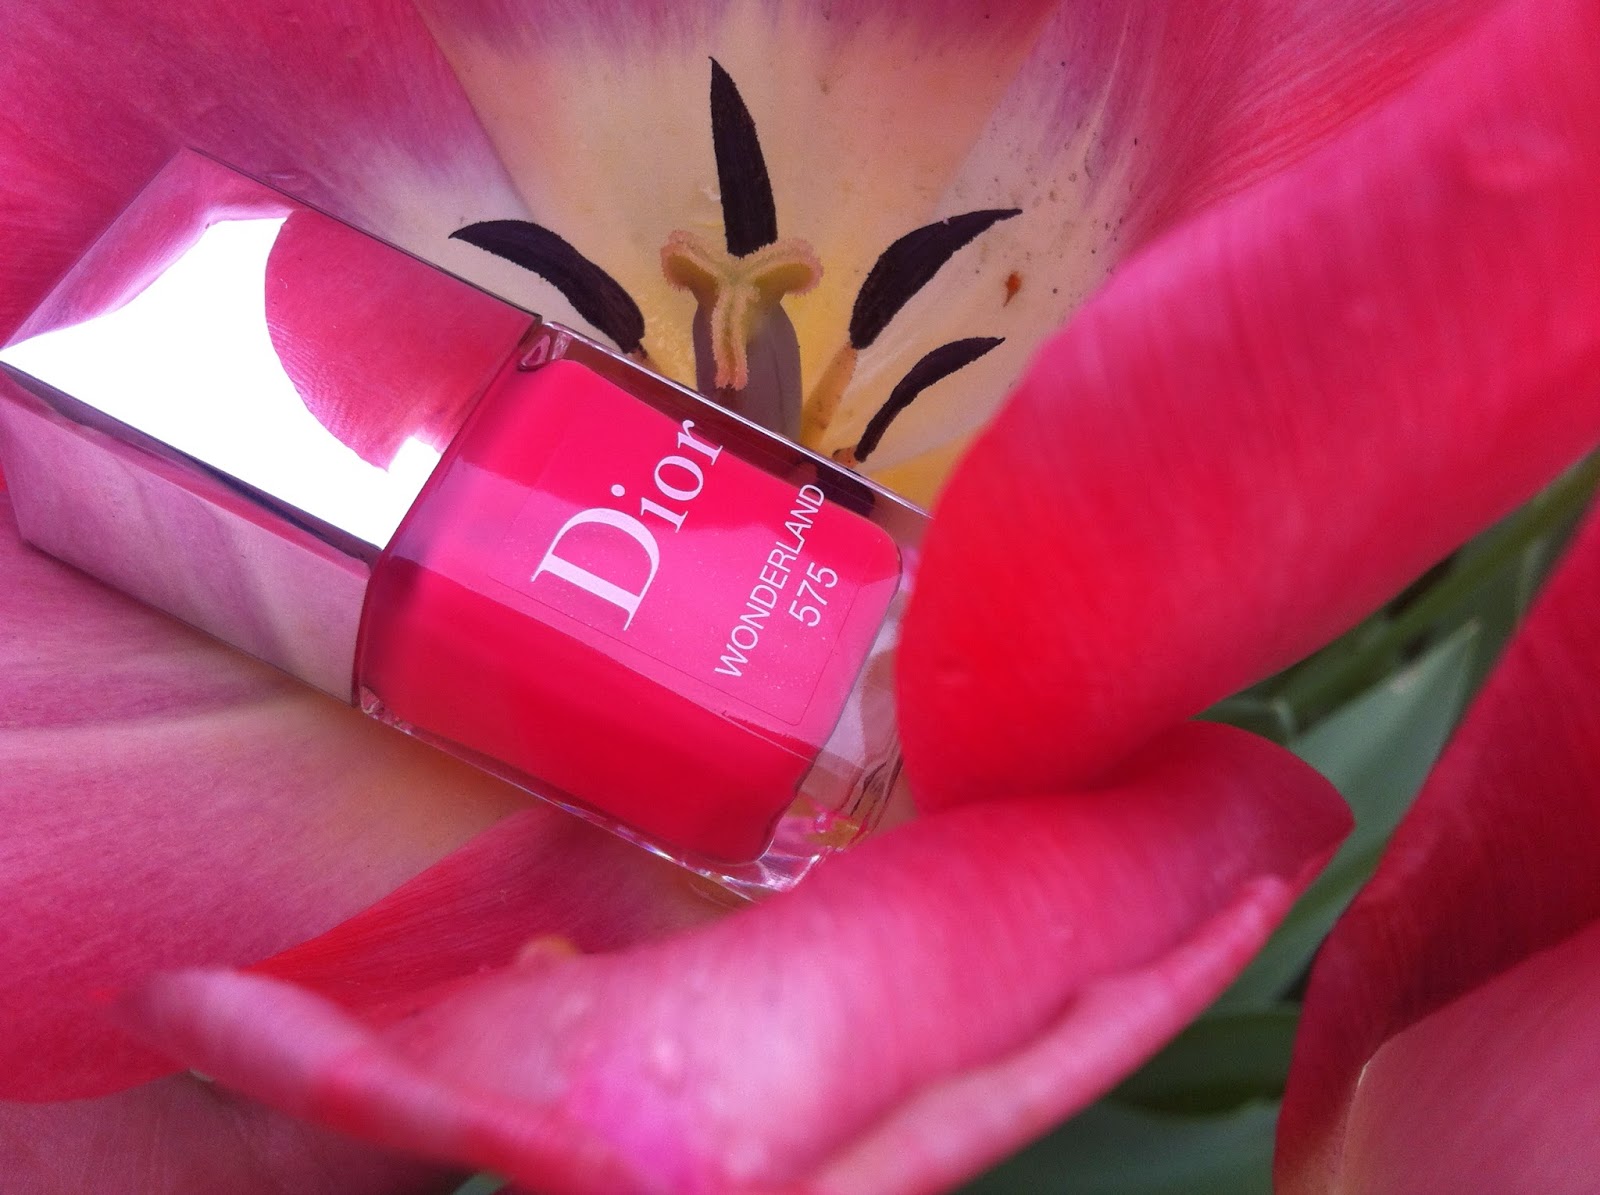 Dior ADDICT Fluid Stick, Dior Vernis 2014, Dior make up primavera 2014, Dior Pandore, Dior Mirage, Dior Wonderland, Dior Aventure